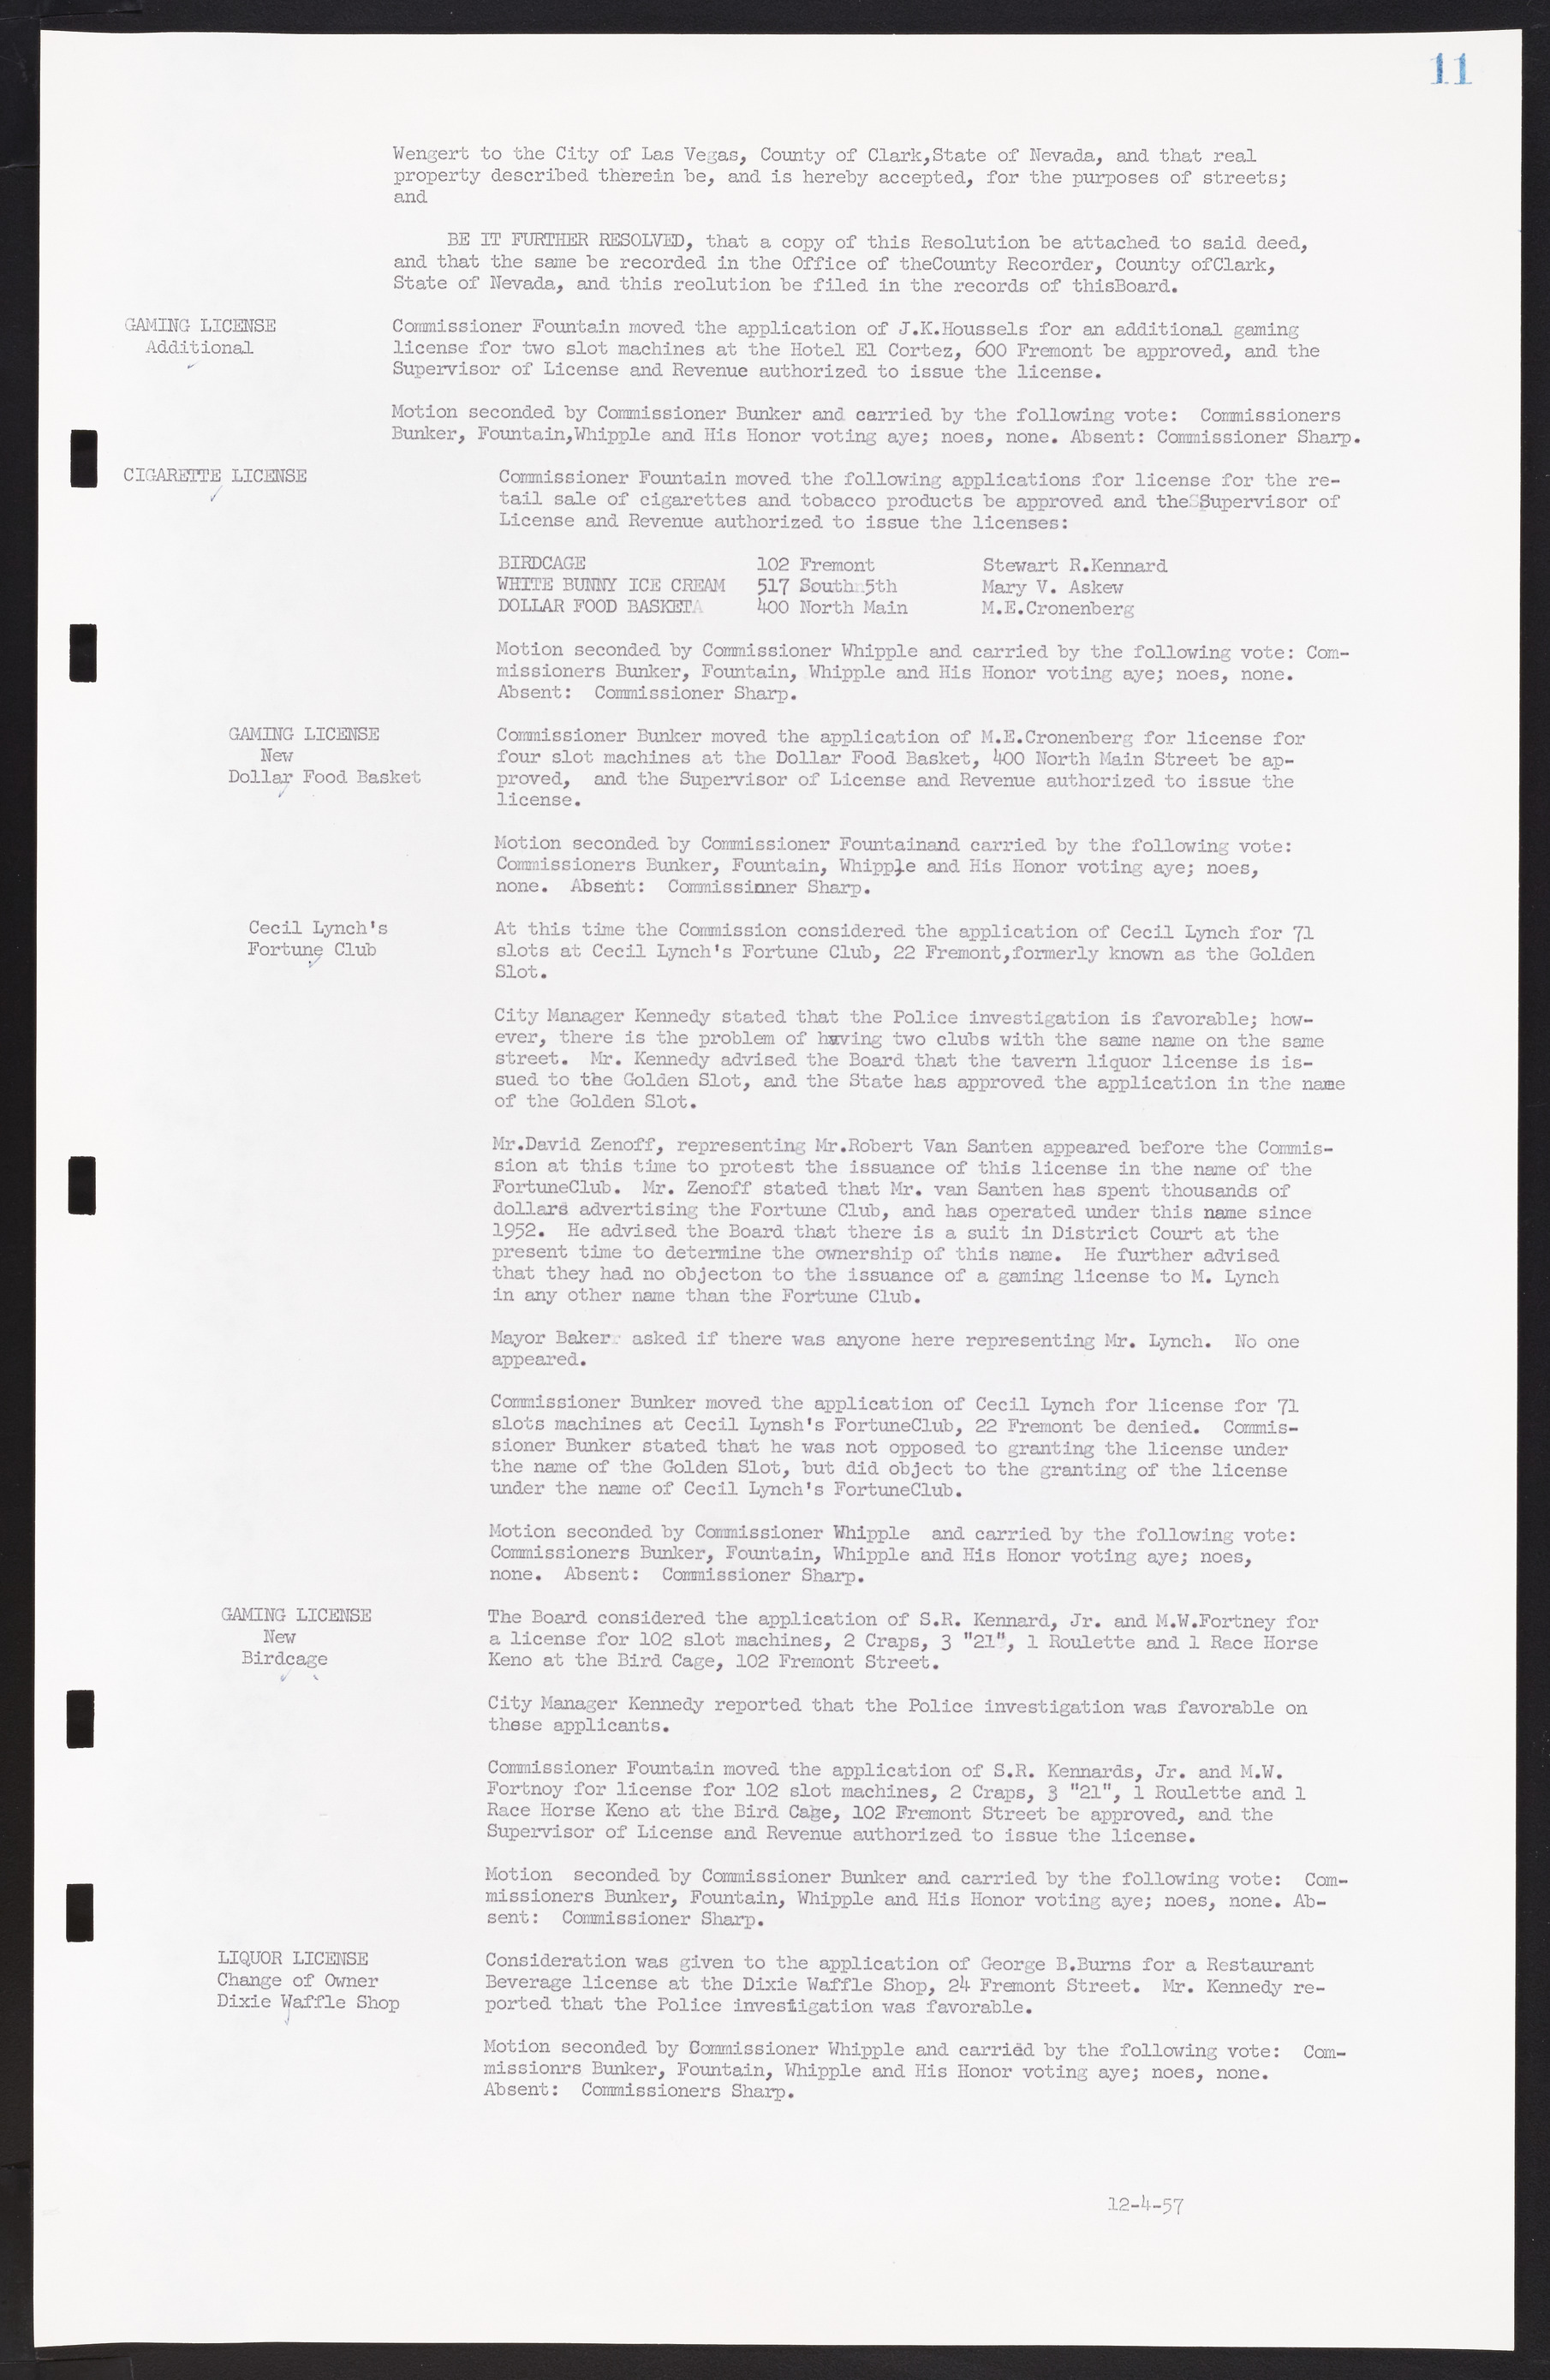 Las Vegas City Commission Minutes, November 20, 1957 to December 2, 1959, lvc000011-15